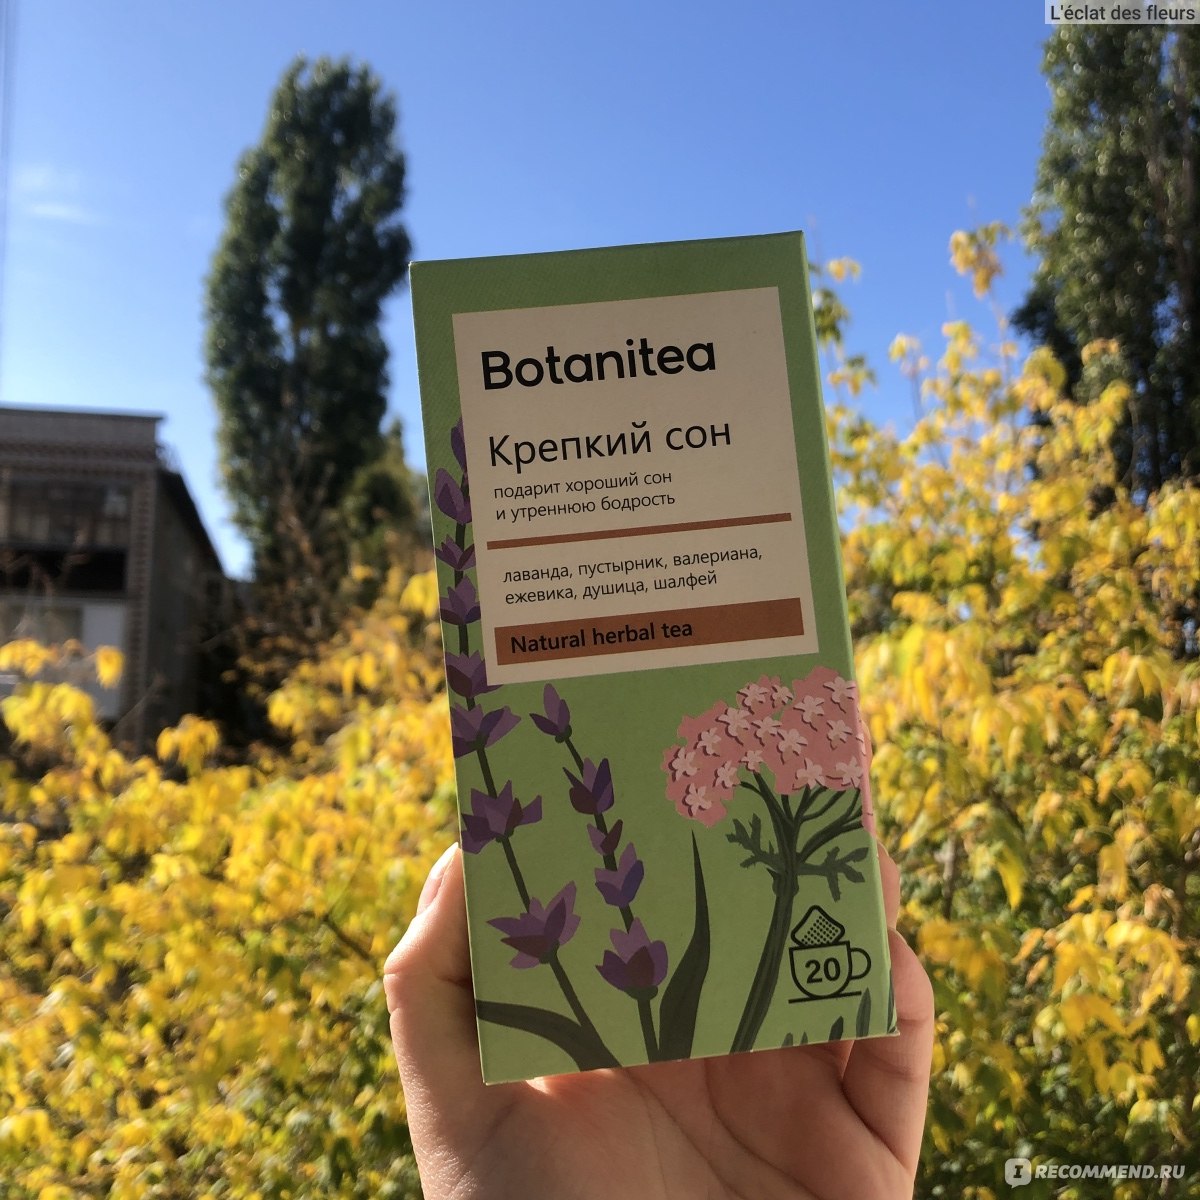 Botanitea. Инструкция травяного чая в пакетиках "botanitea" Иммунити.